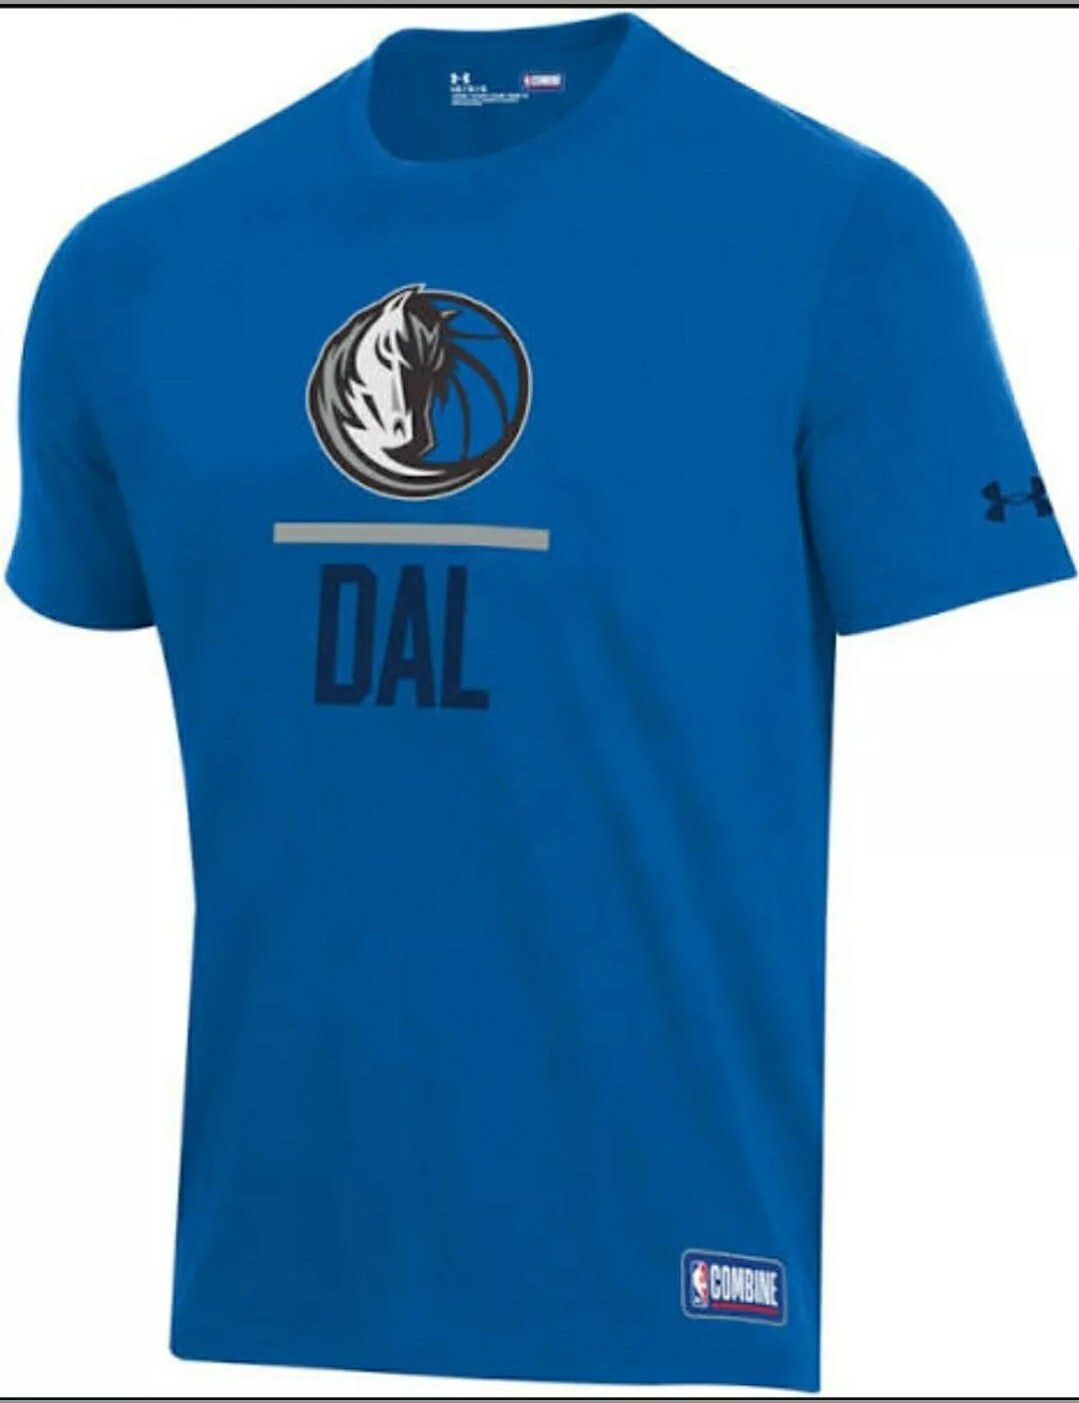 New Under Armour Dallas Mavericks NBA Combine Graphic T-Shirt Sty 1318890 XL 2XL 4XL